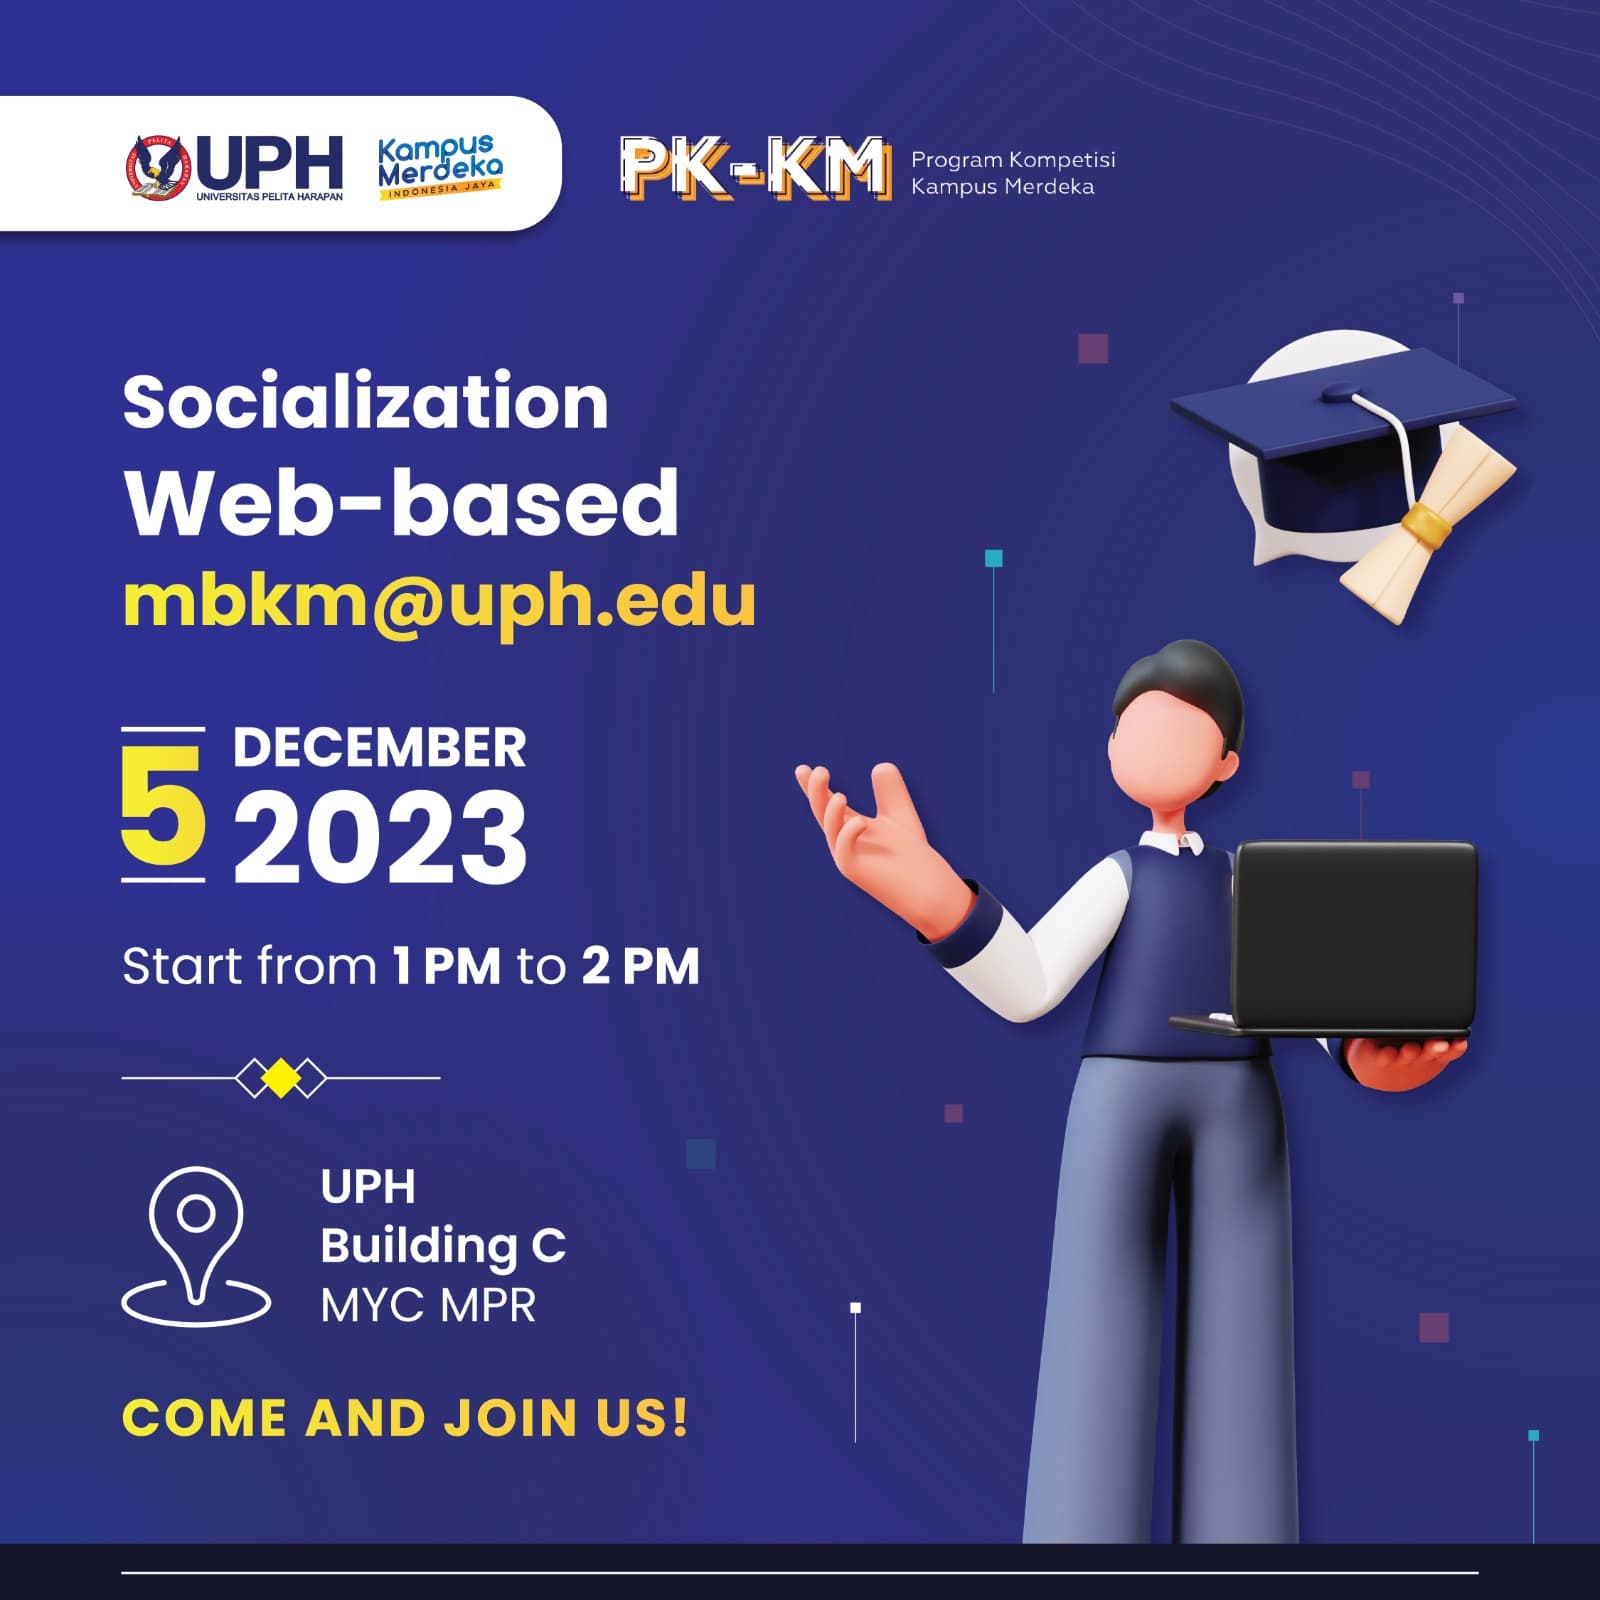 Socialization Web-based mbkm@uph.edu